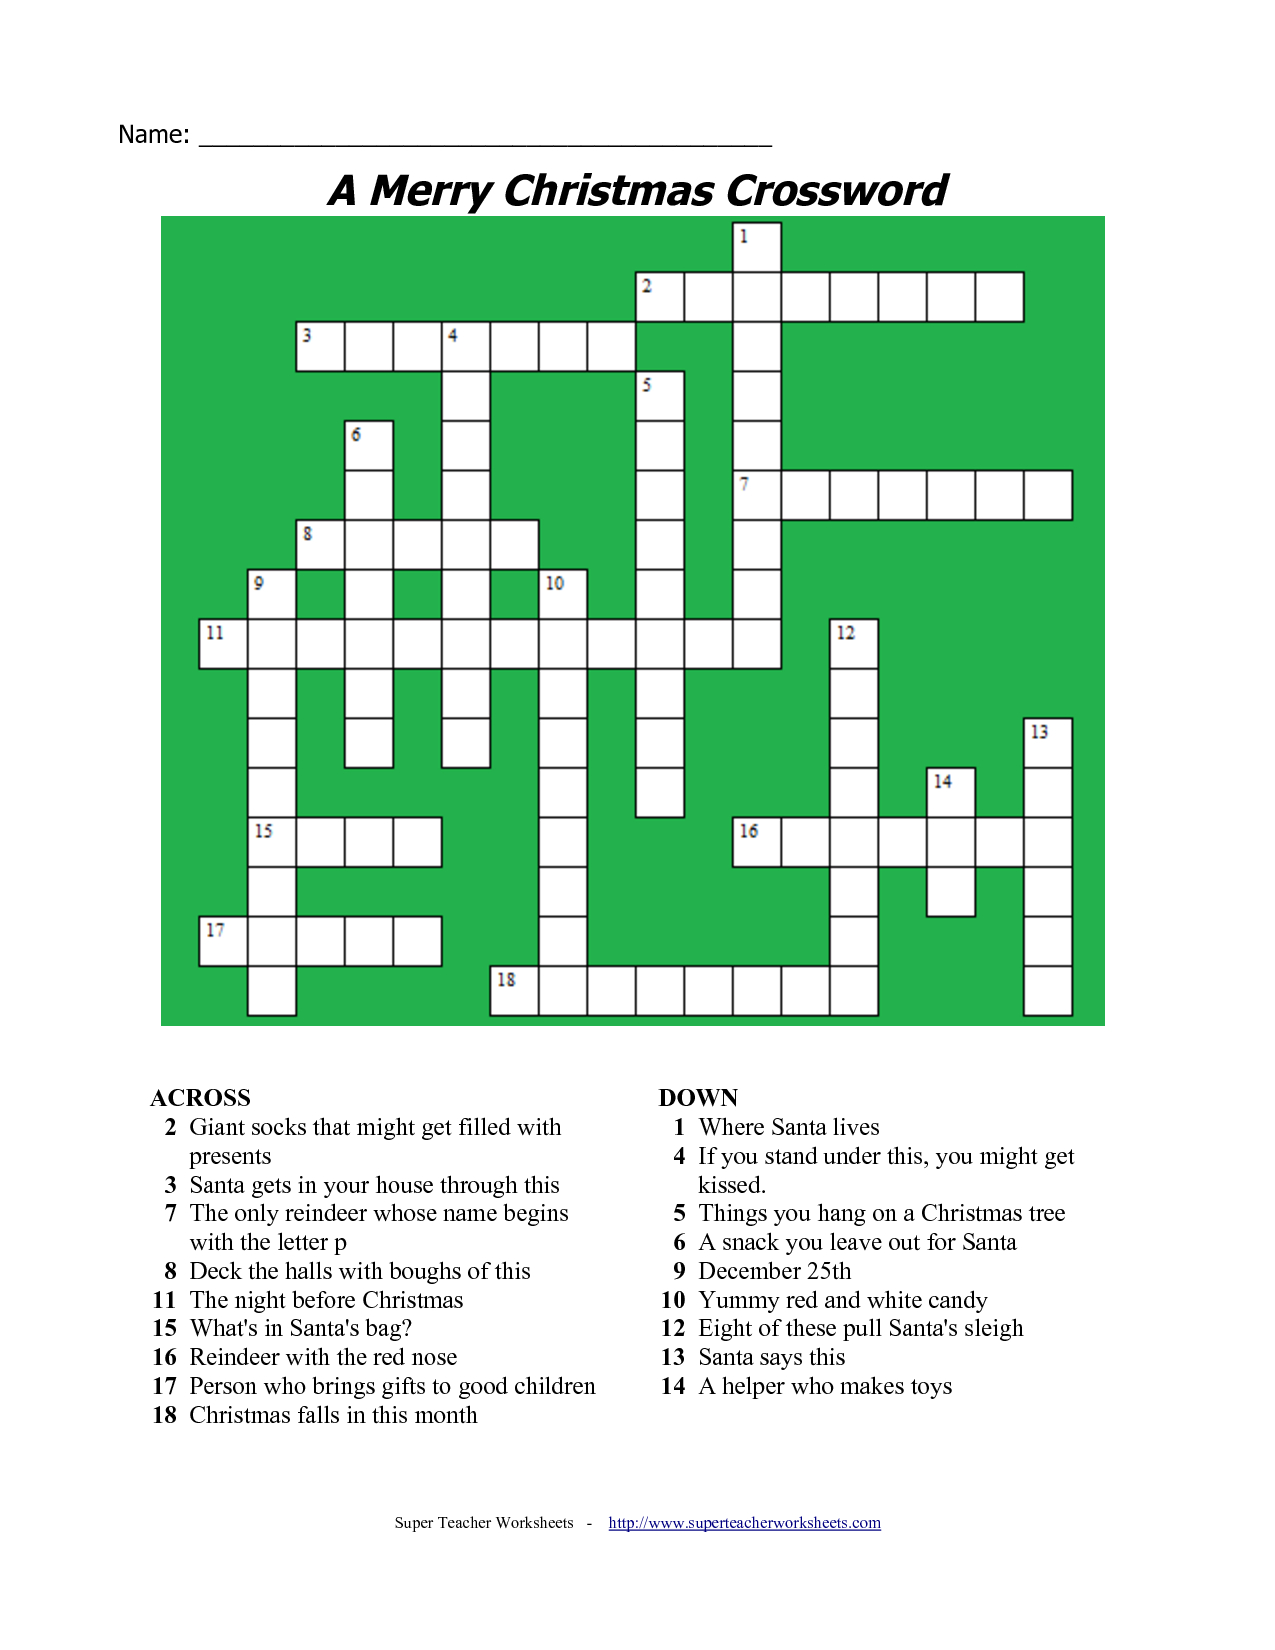 20 Fun Printable Christmas Crossword Puzzles | Kittybabylove - Printable Christmas Crossword Puzzles With Answers